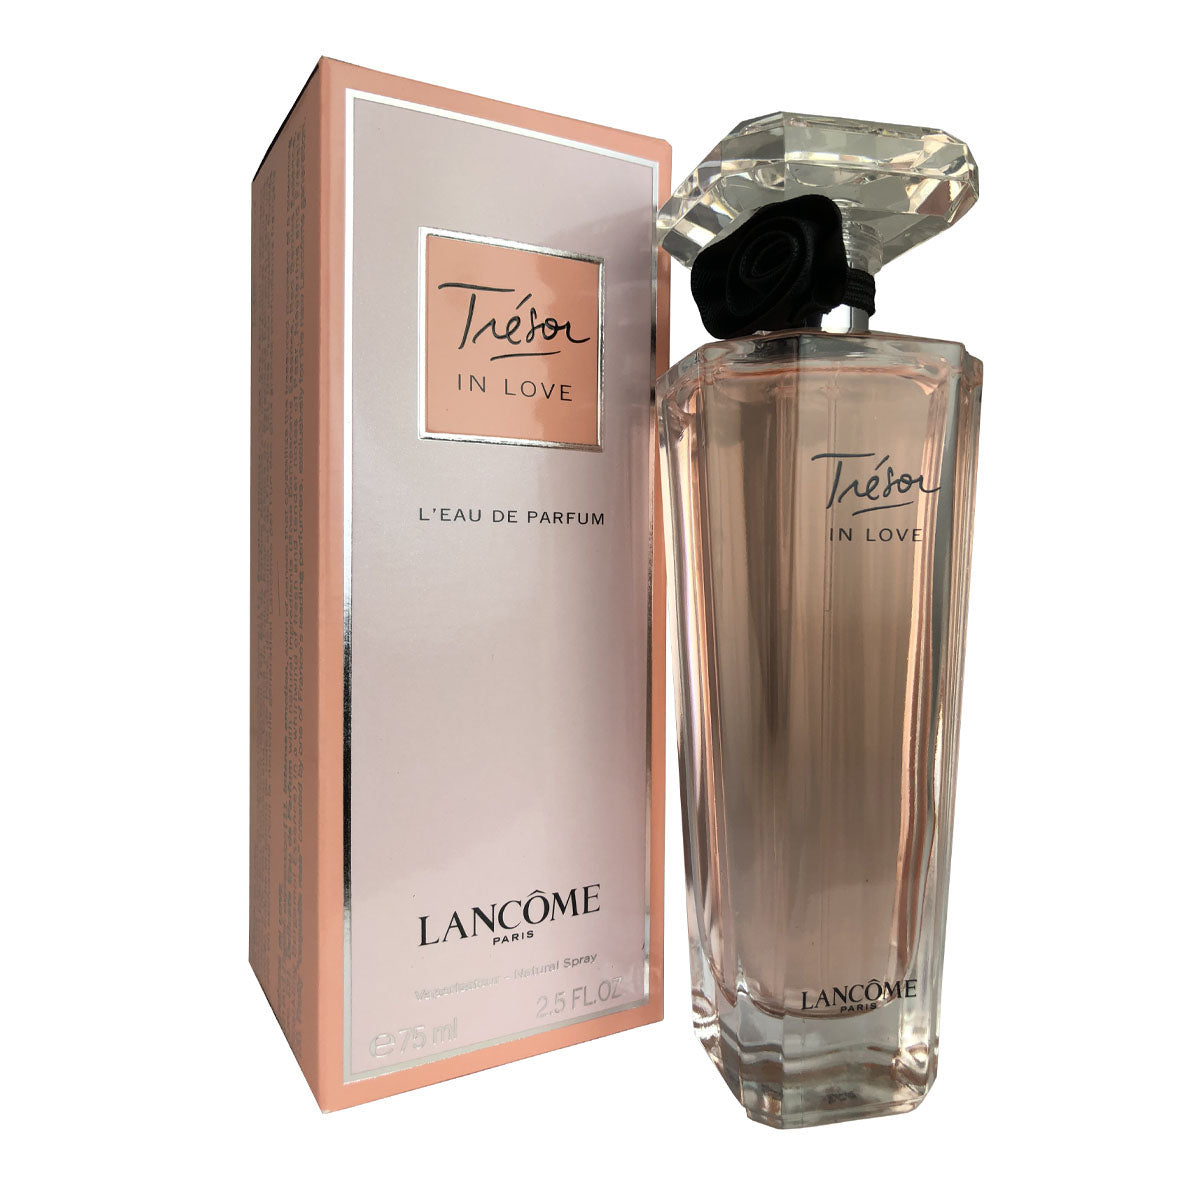 Tresor In Love for Women 2.5 oz by Lancome L’Eau de Parfum Spray